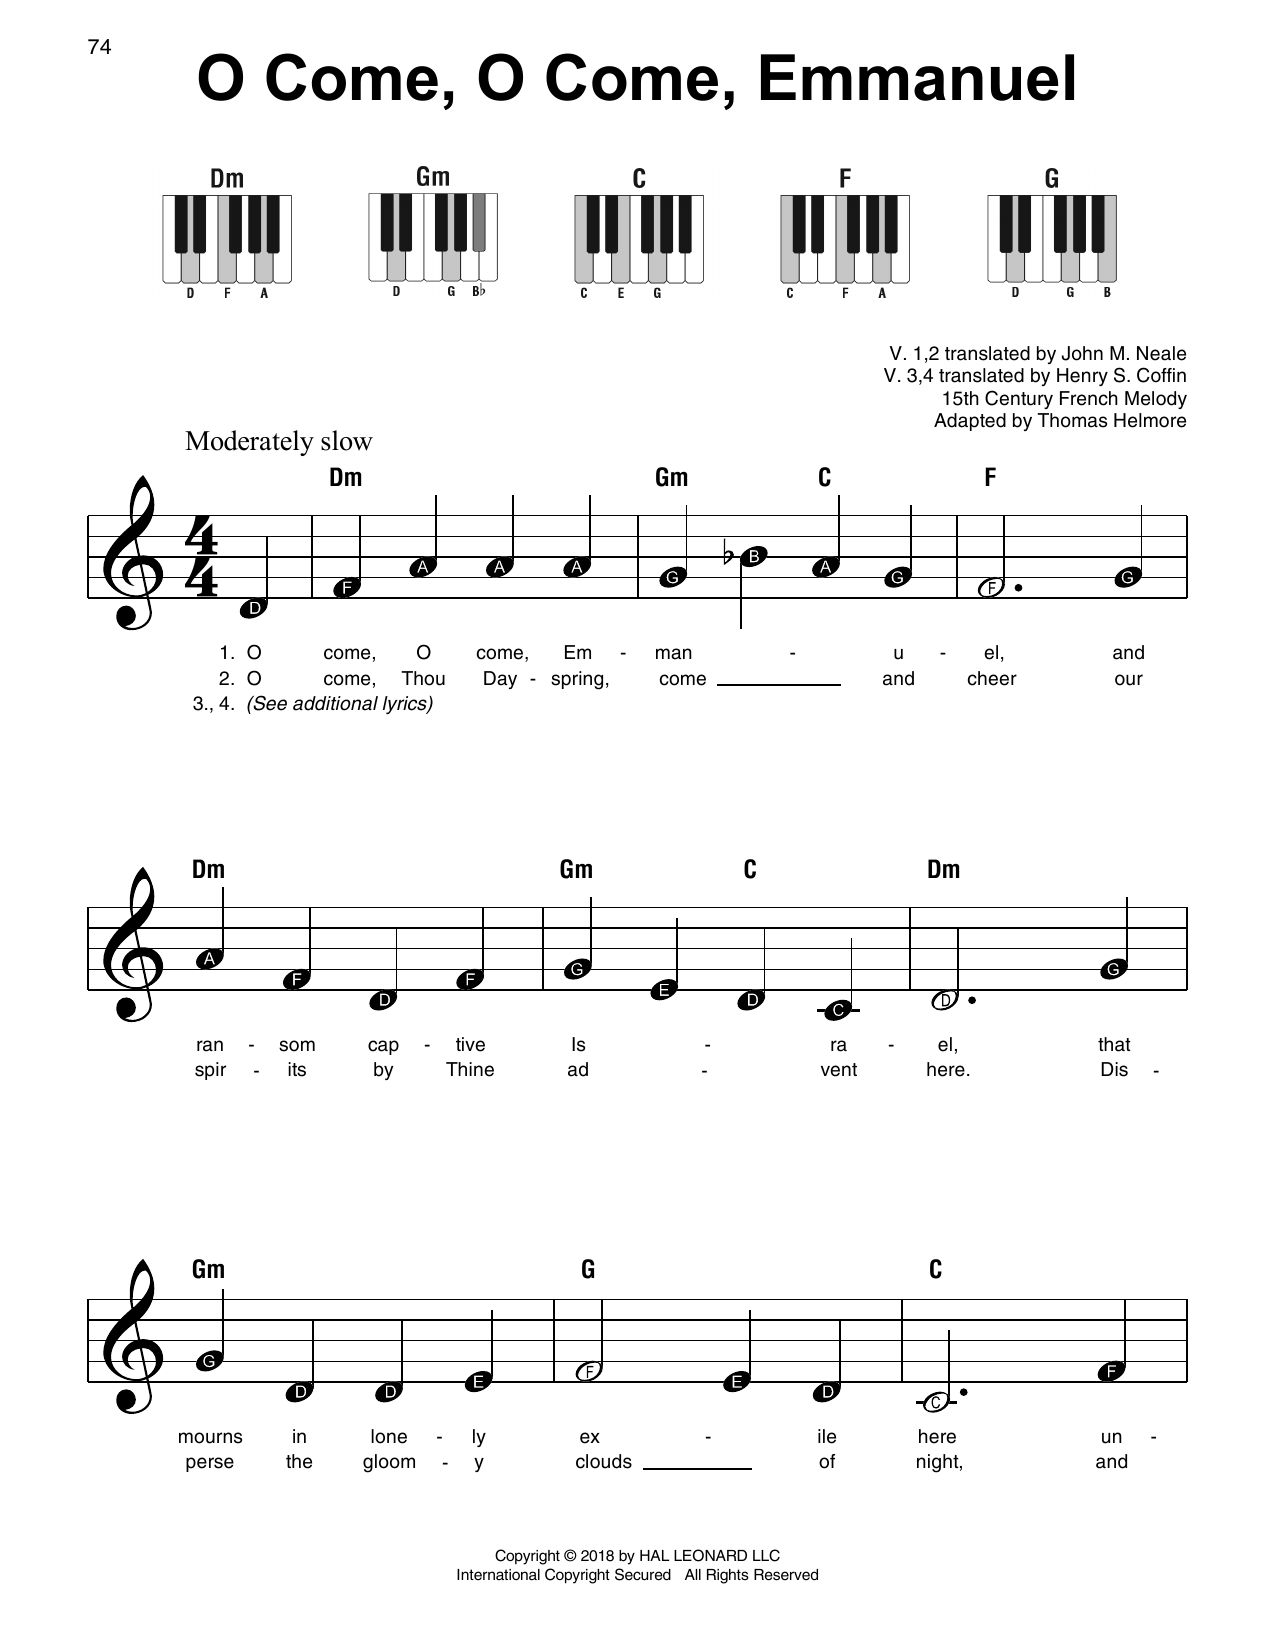 Christmas Carol O Come, O Come, Emmanuel sheet music notes and chords arranged for Cello and Piano